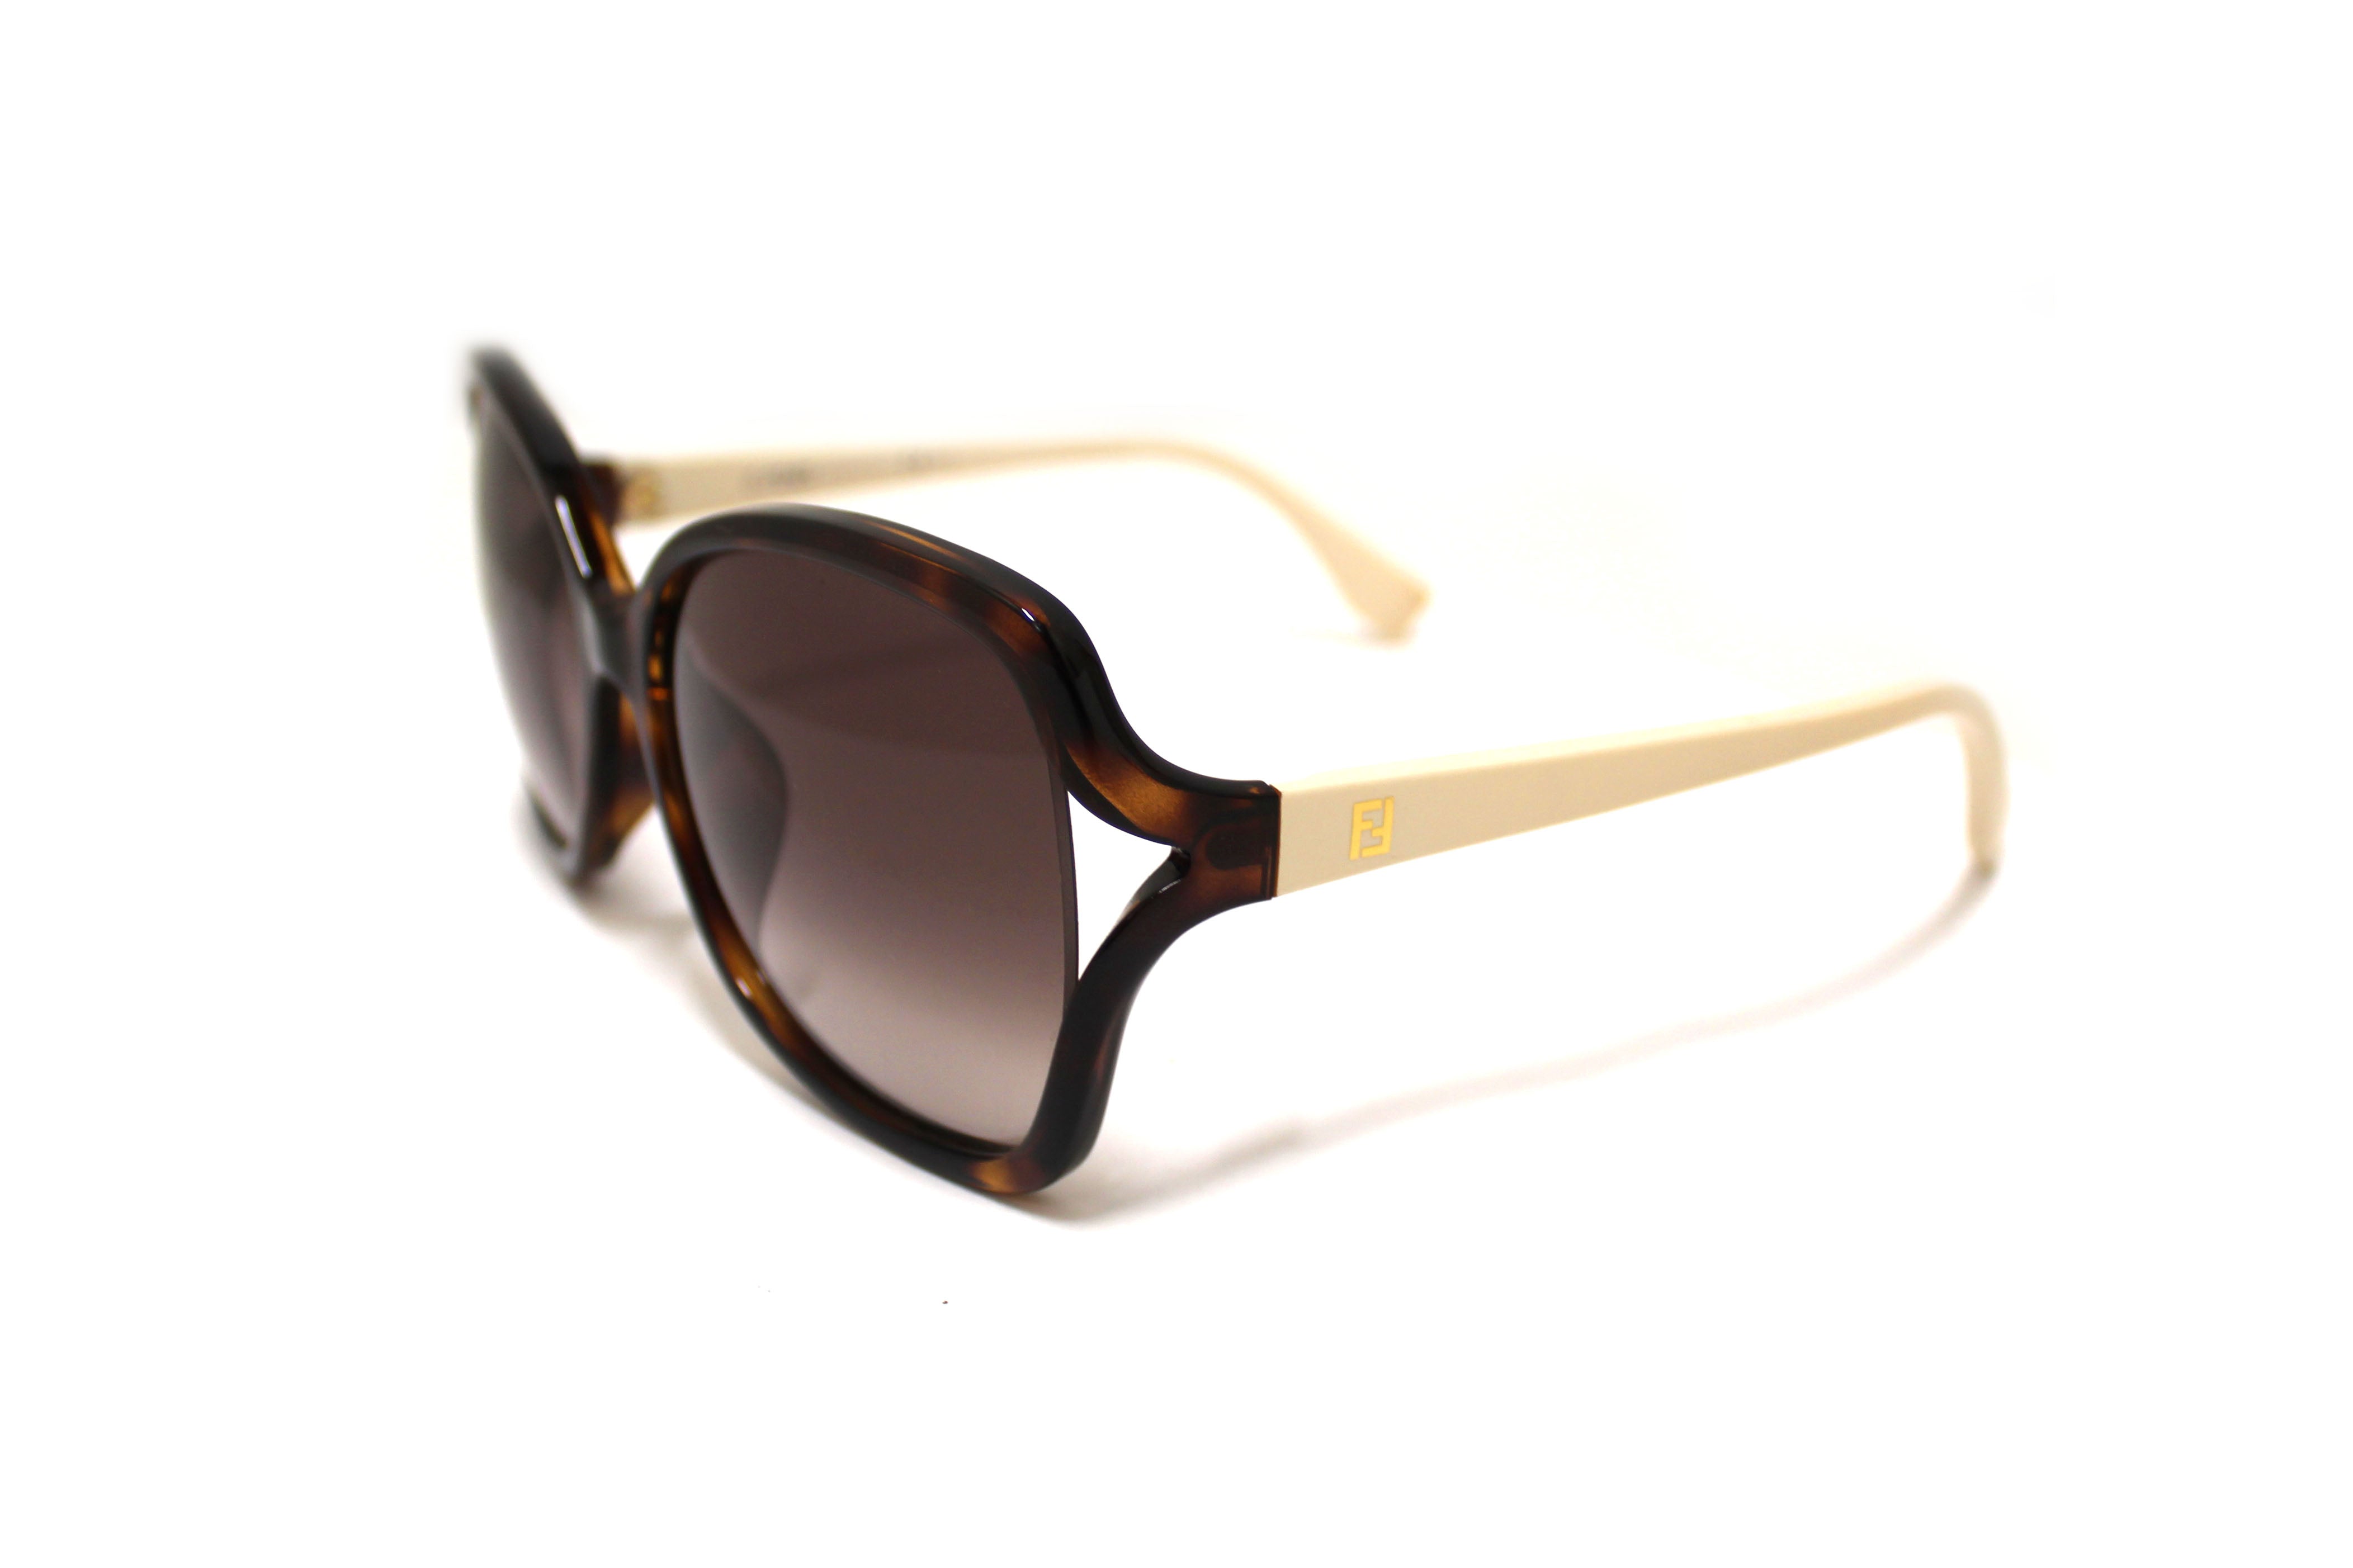 Authentic Fendi Tortoise Shell Acetate and White Frame Sunglasses